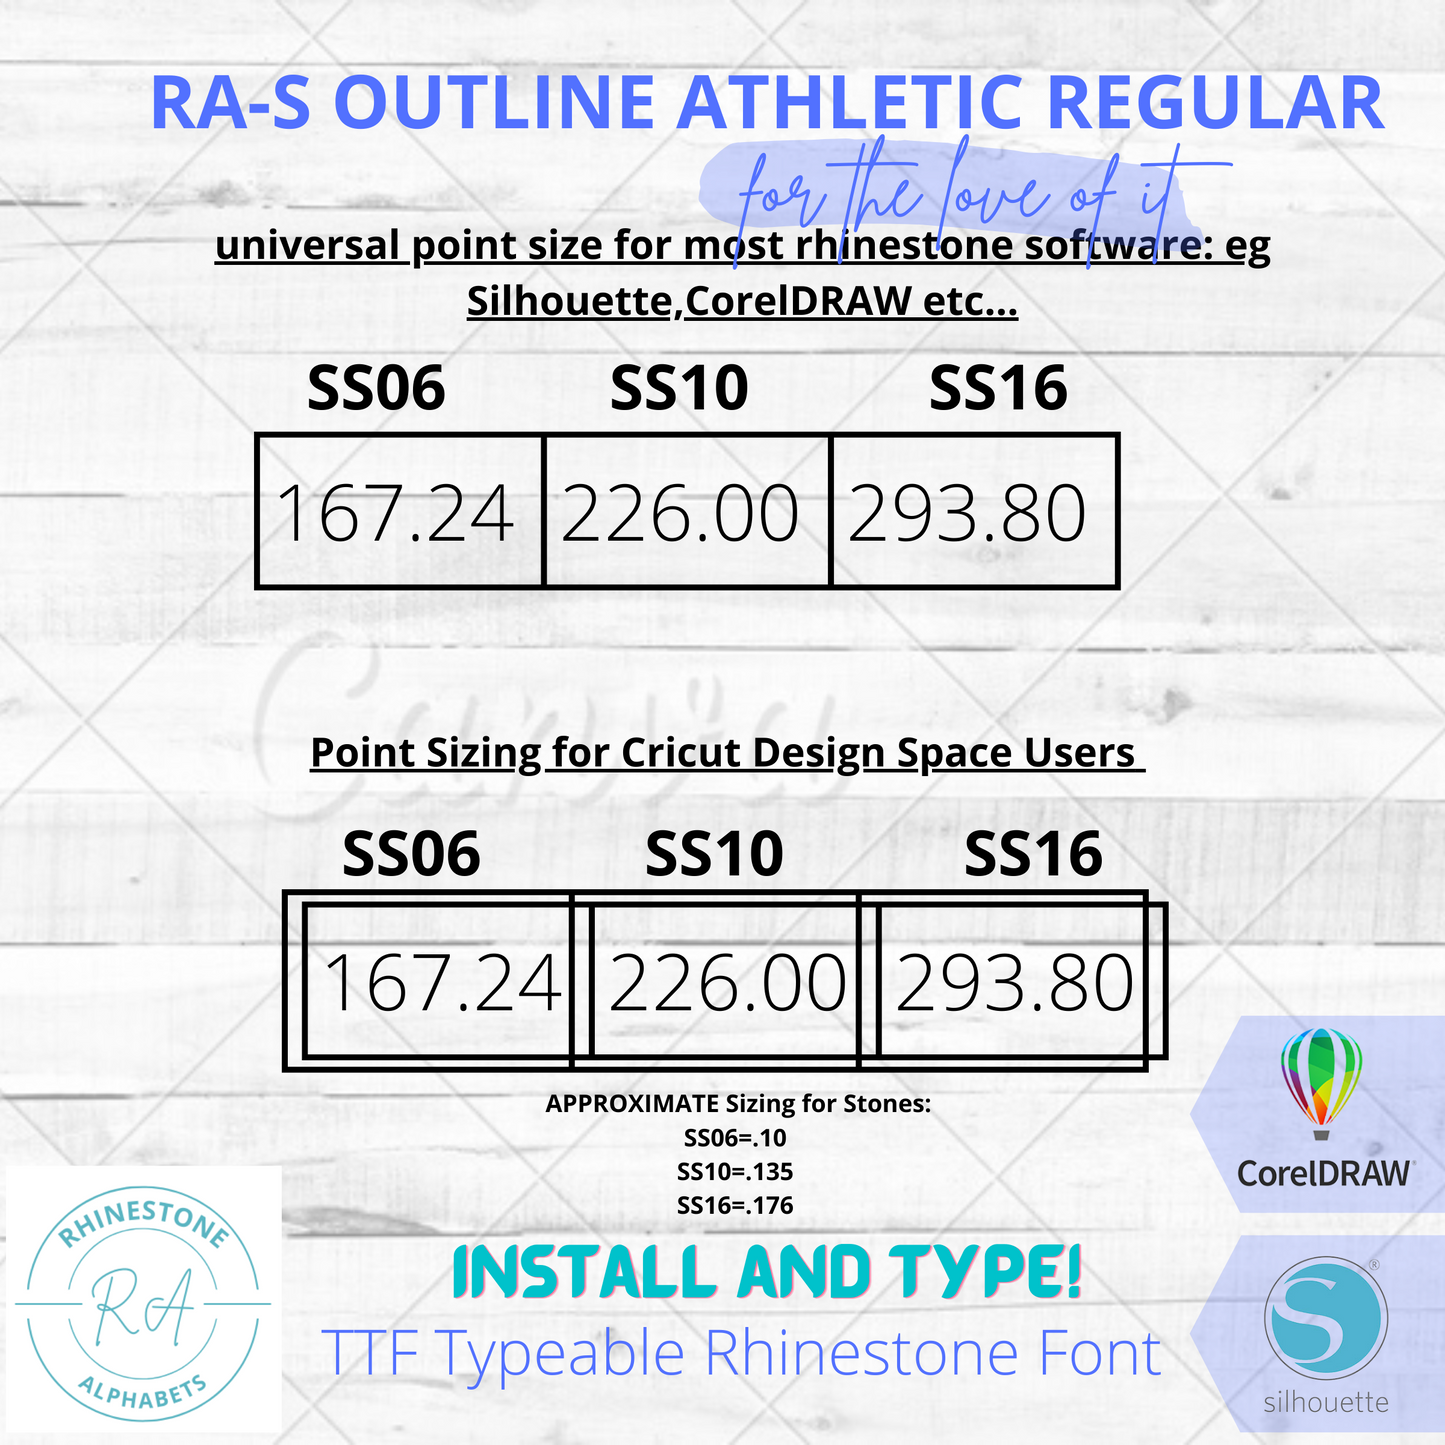 RA-S Outline Athletic Regular